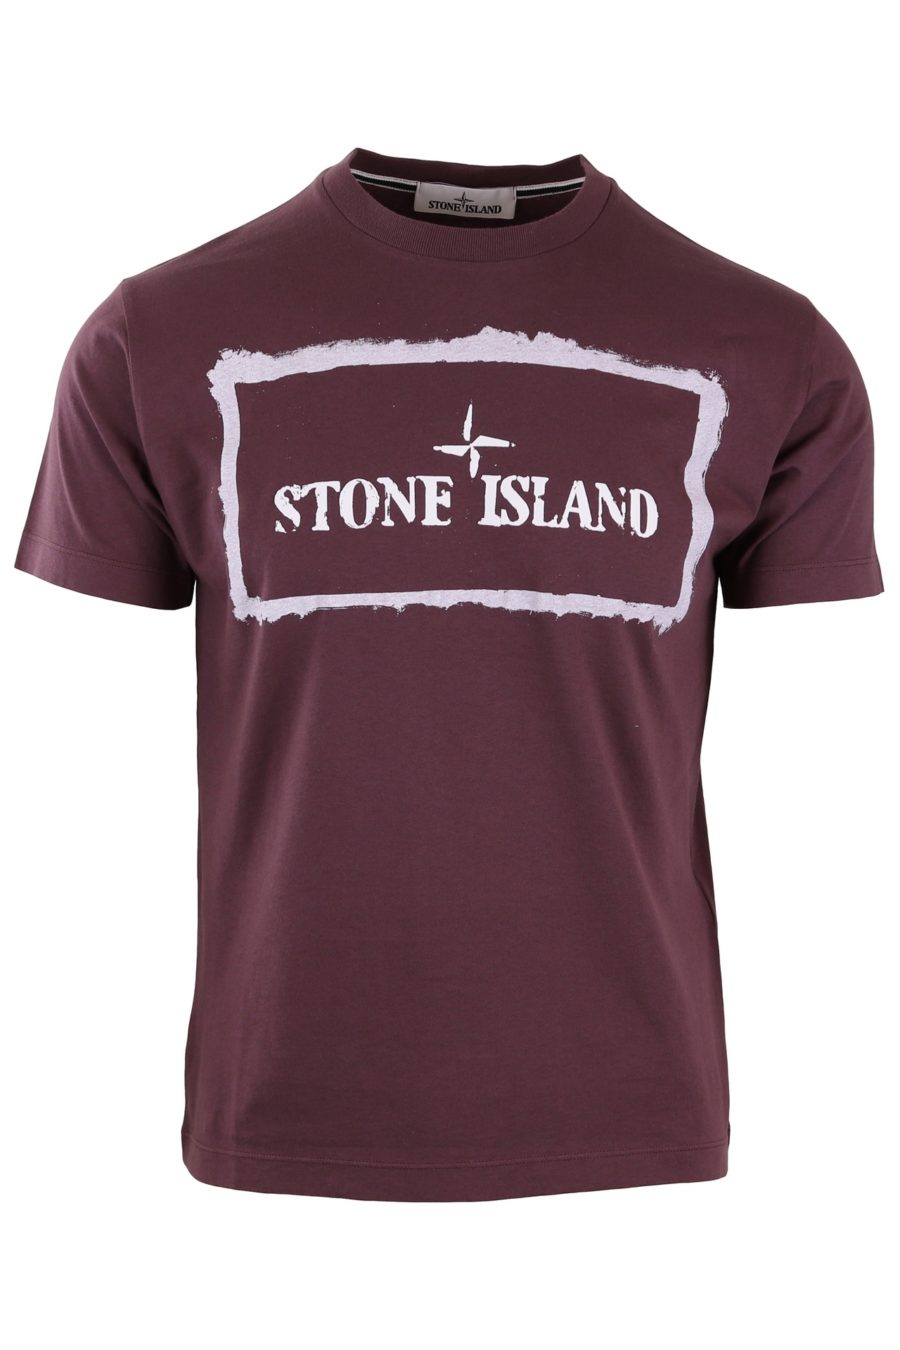 T-shirt Stone Island burgundy logo white - fb34f081377006574e4db05afbdb1d5403d65410